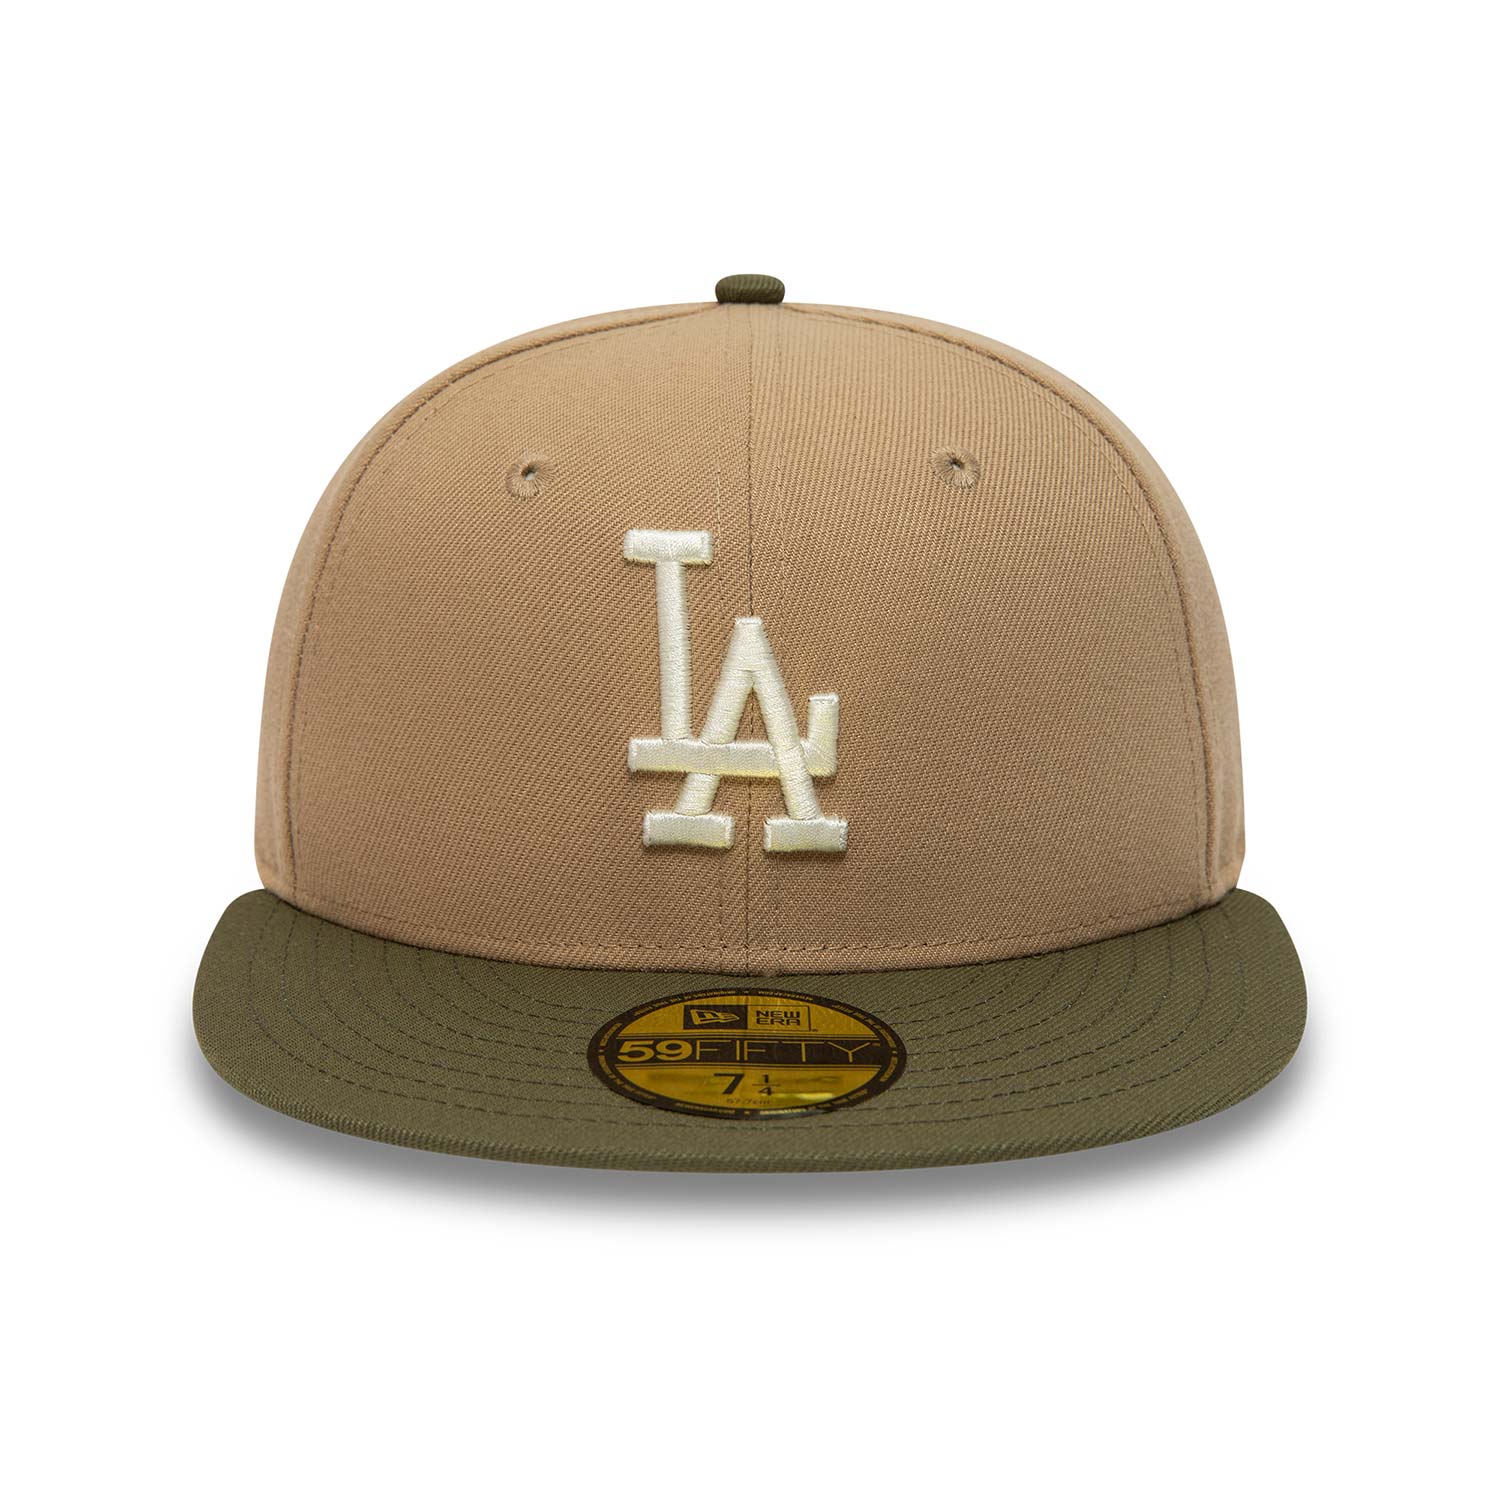 Official New Era LA Dodgers Light Beige 59FIFTY Fitted Cap B8541_263 ...